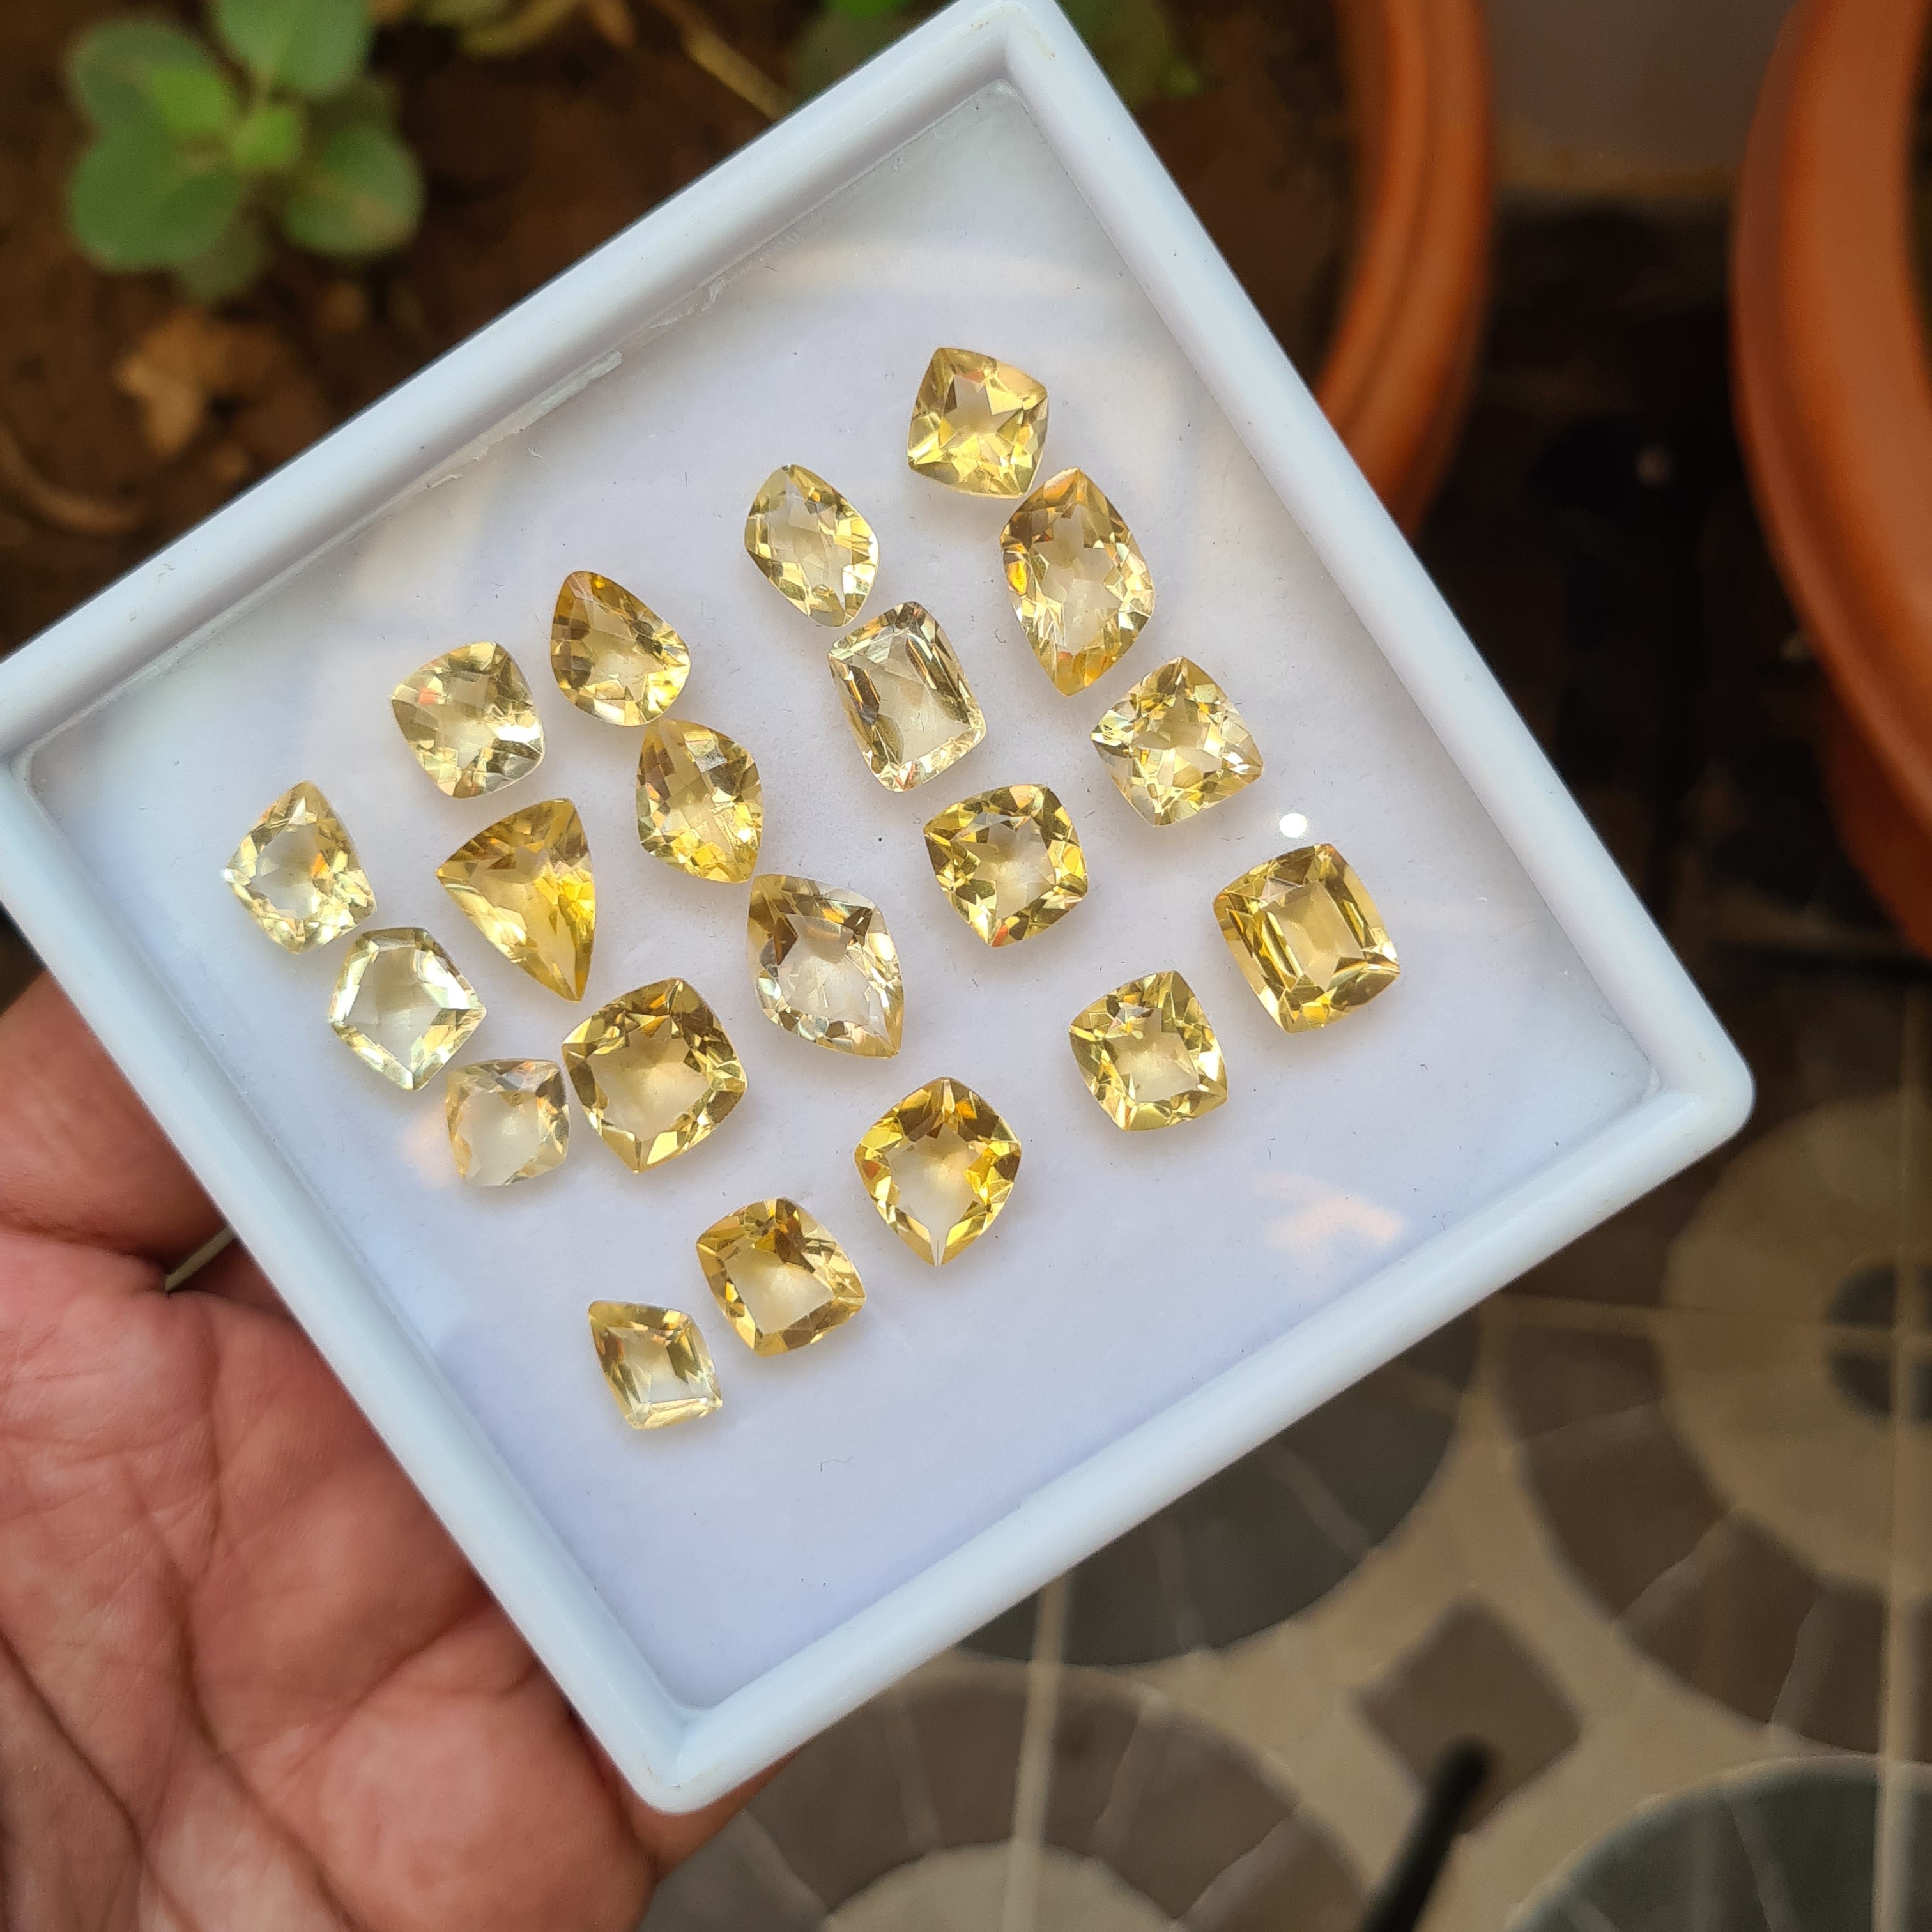 20 Pcs Natural Citrine Faceted Gemstones Fancy Shape, 8-15mm Size - The LabradoriteKing